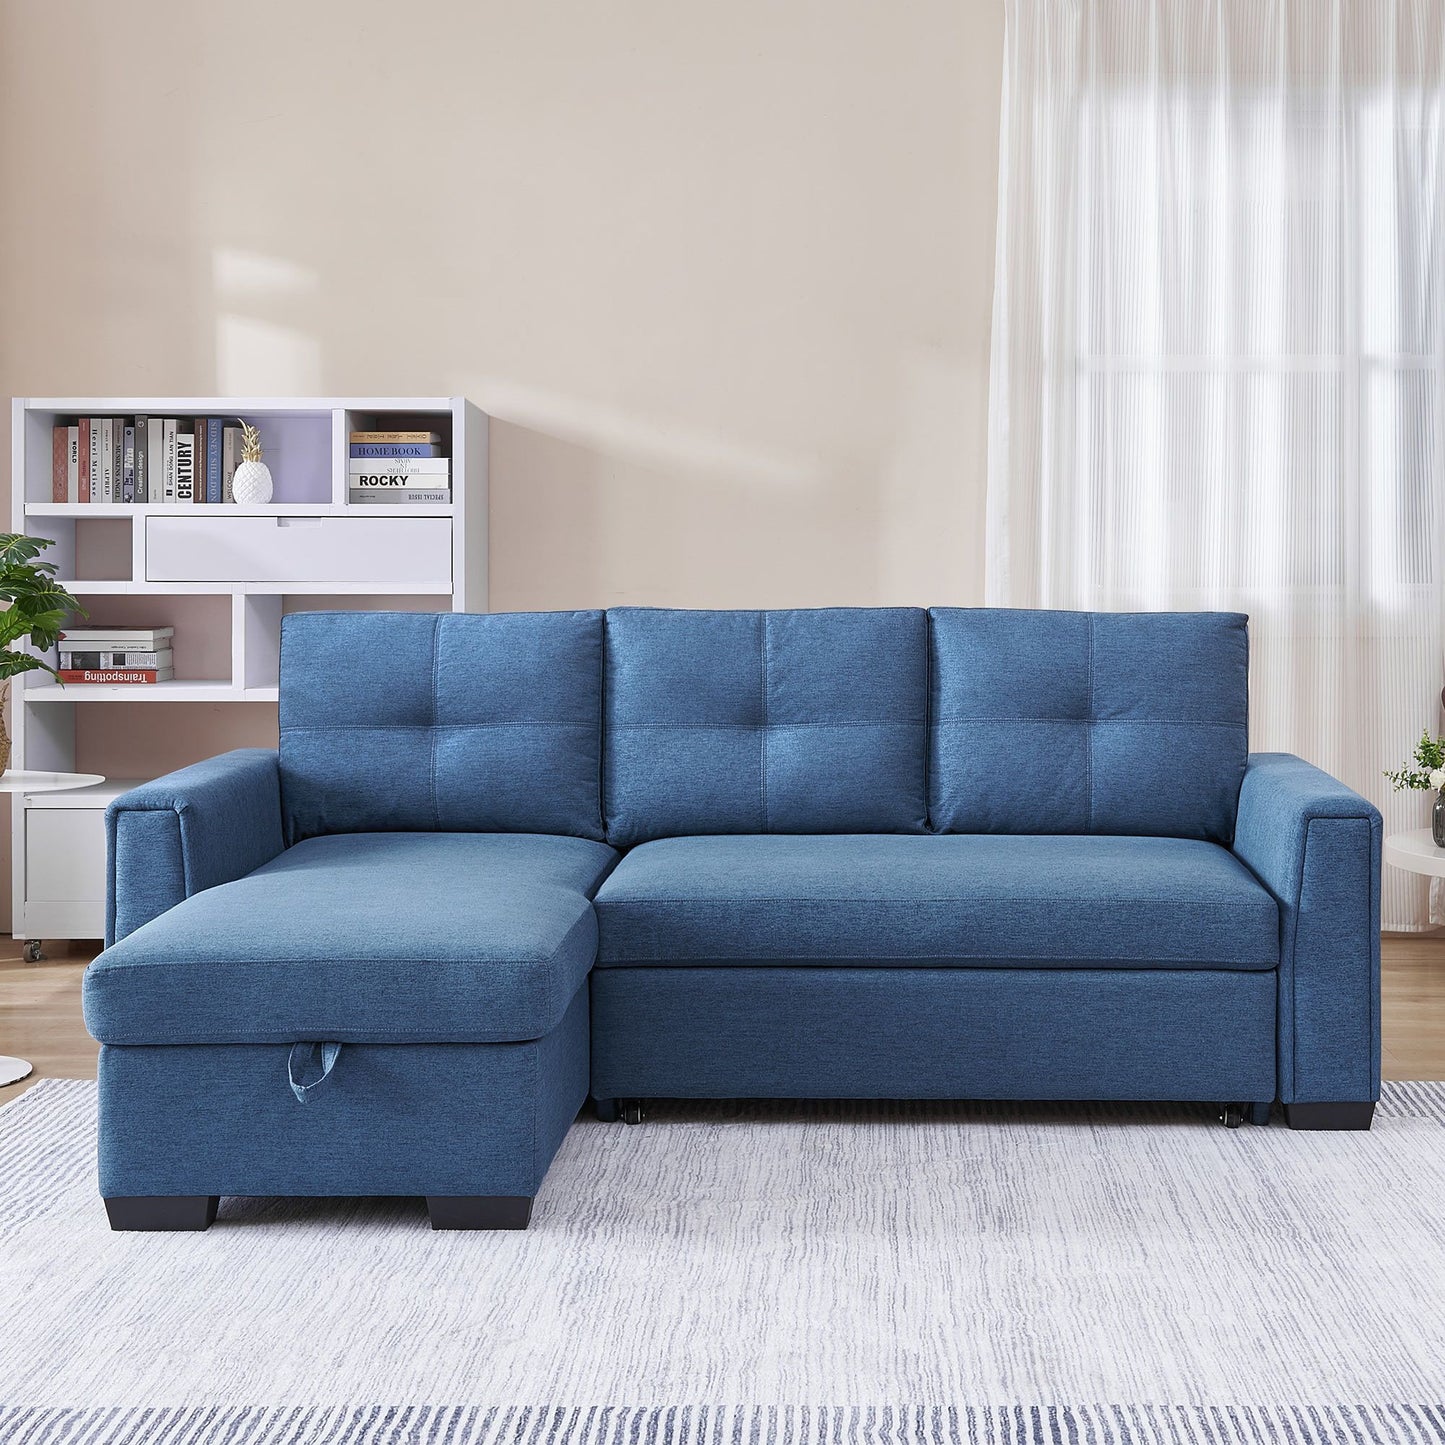 92" Blue Polyester Blend Convertible Futon Sleeper Sofa With Black Legs